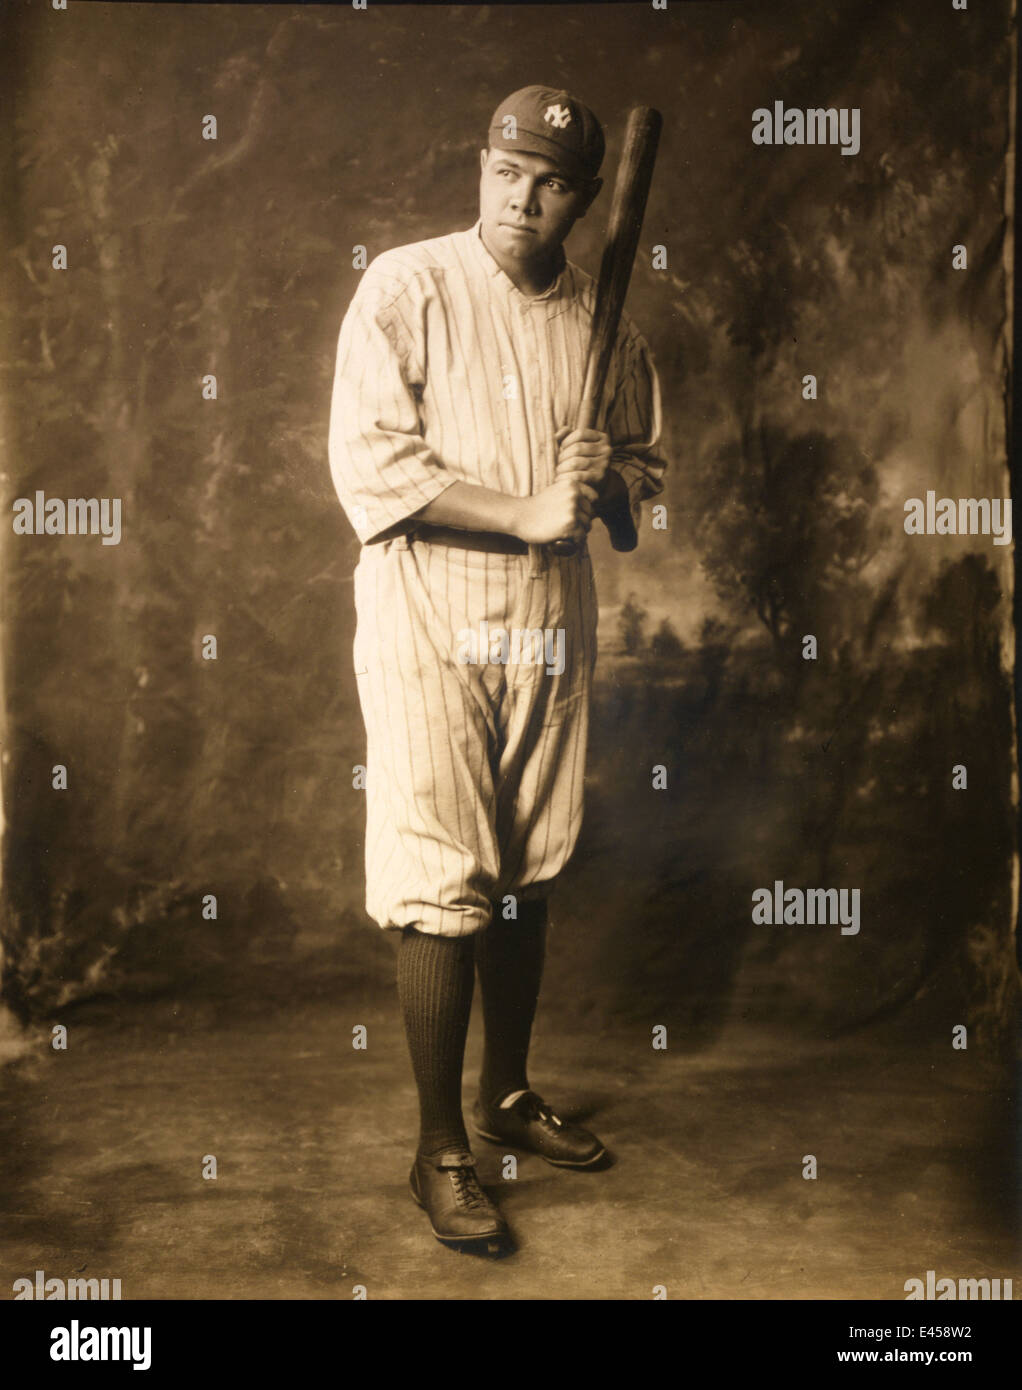 Babe Ruth, US-amerikanischer Baseballspieler Babe Ruth Stockfoto